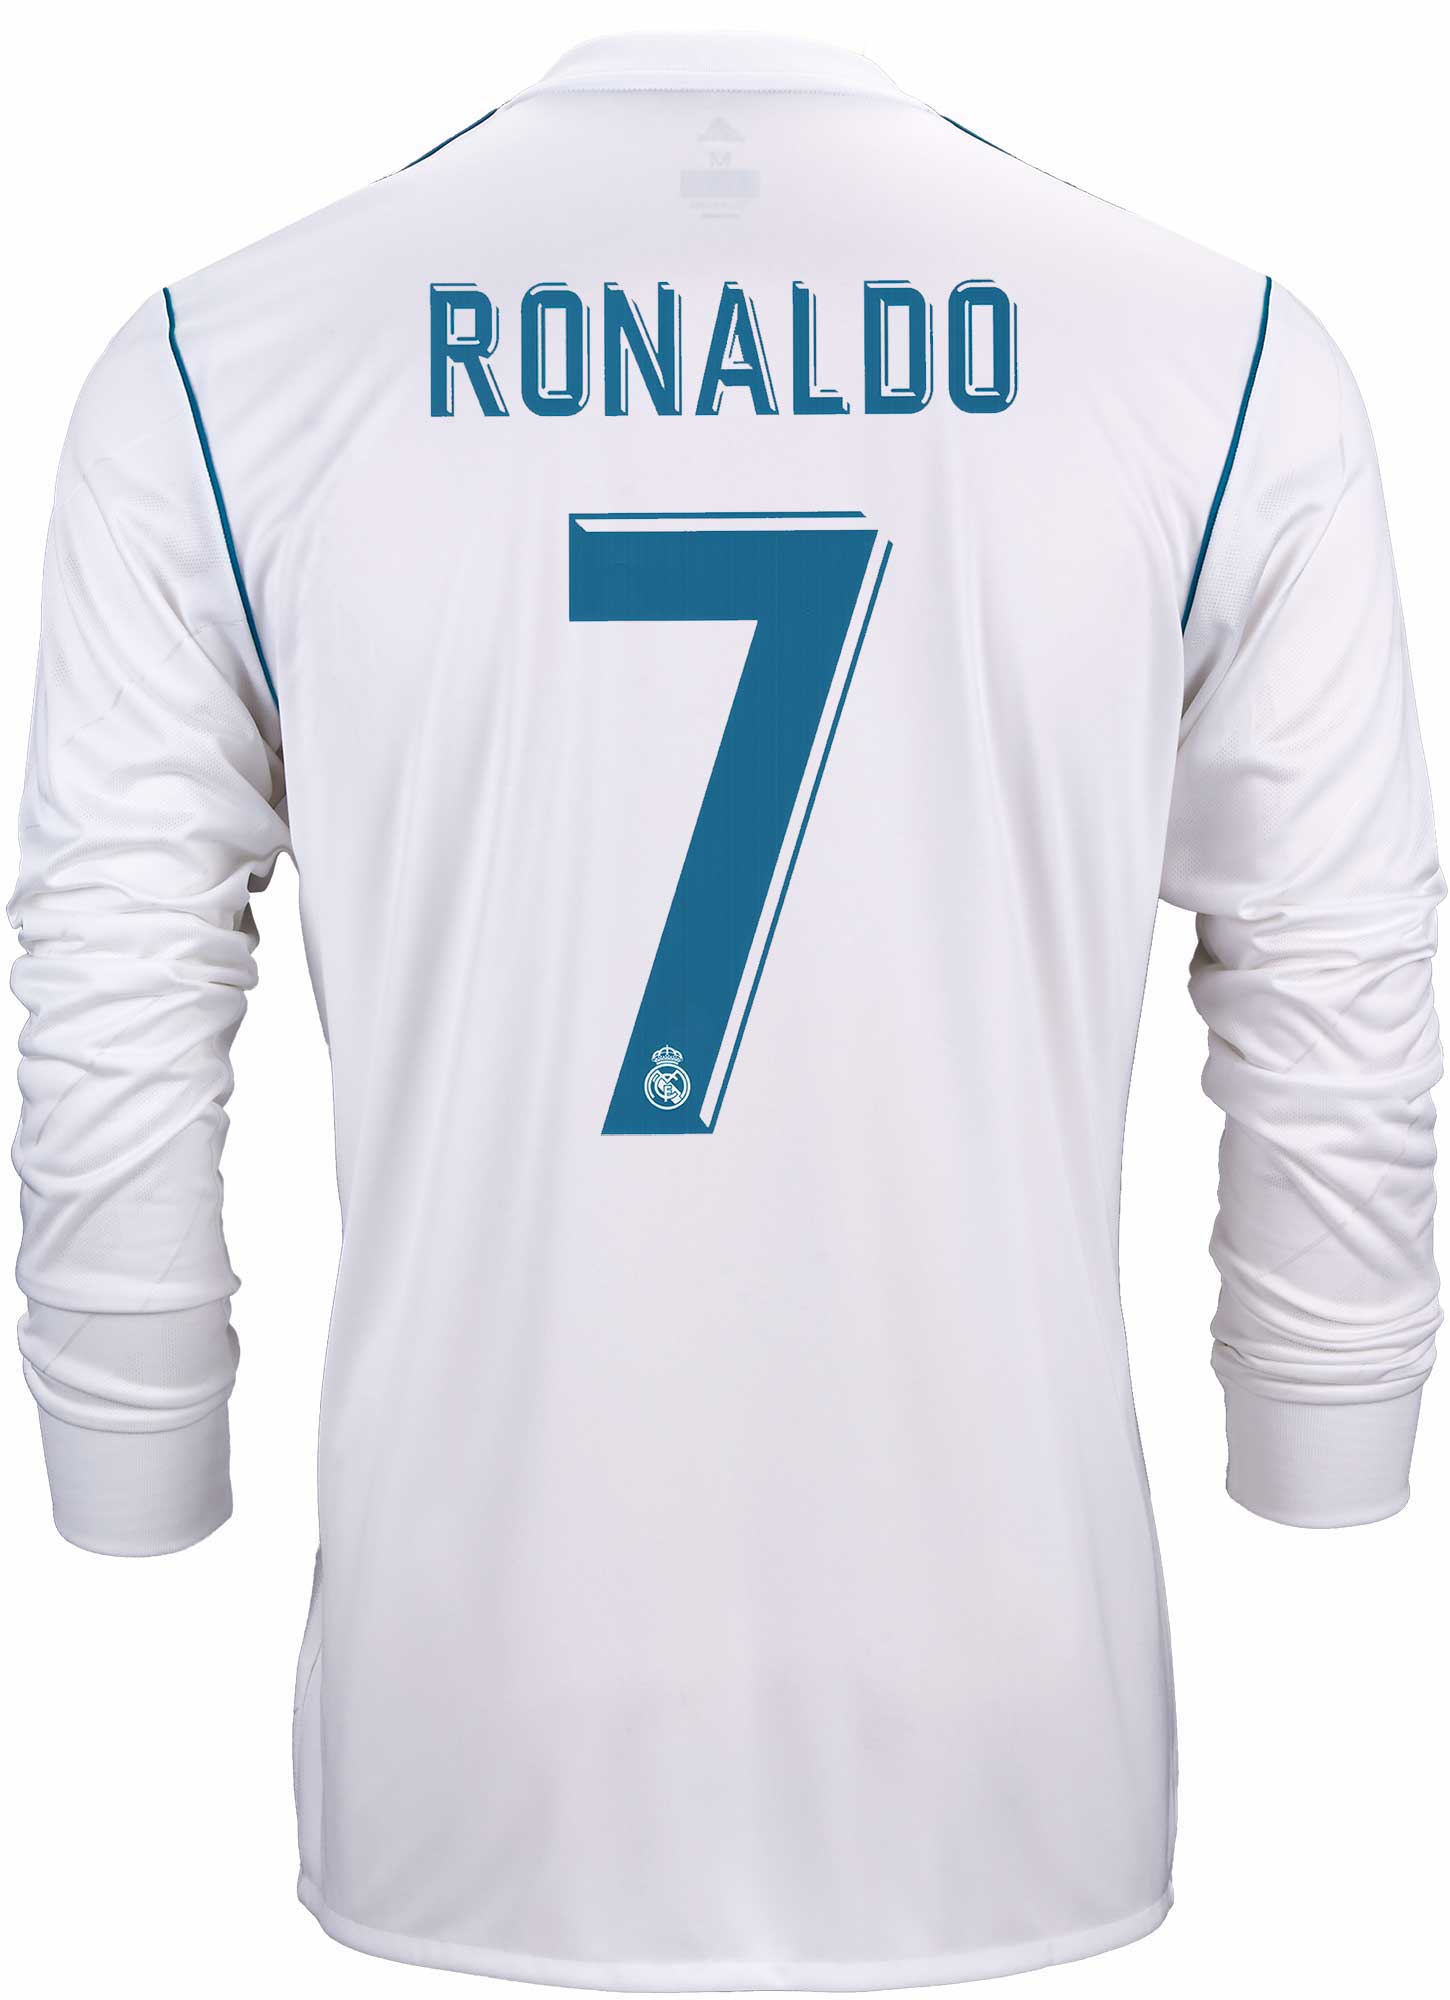 Cristiano Ronaldo Shirt